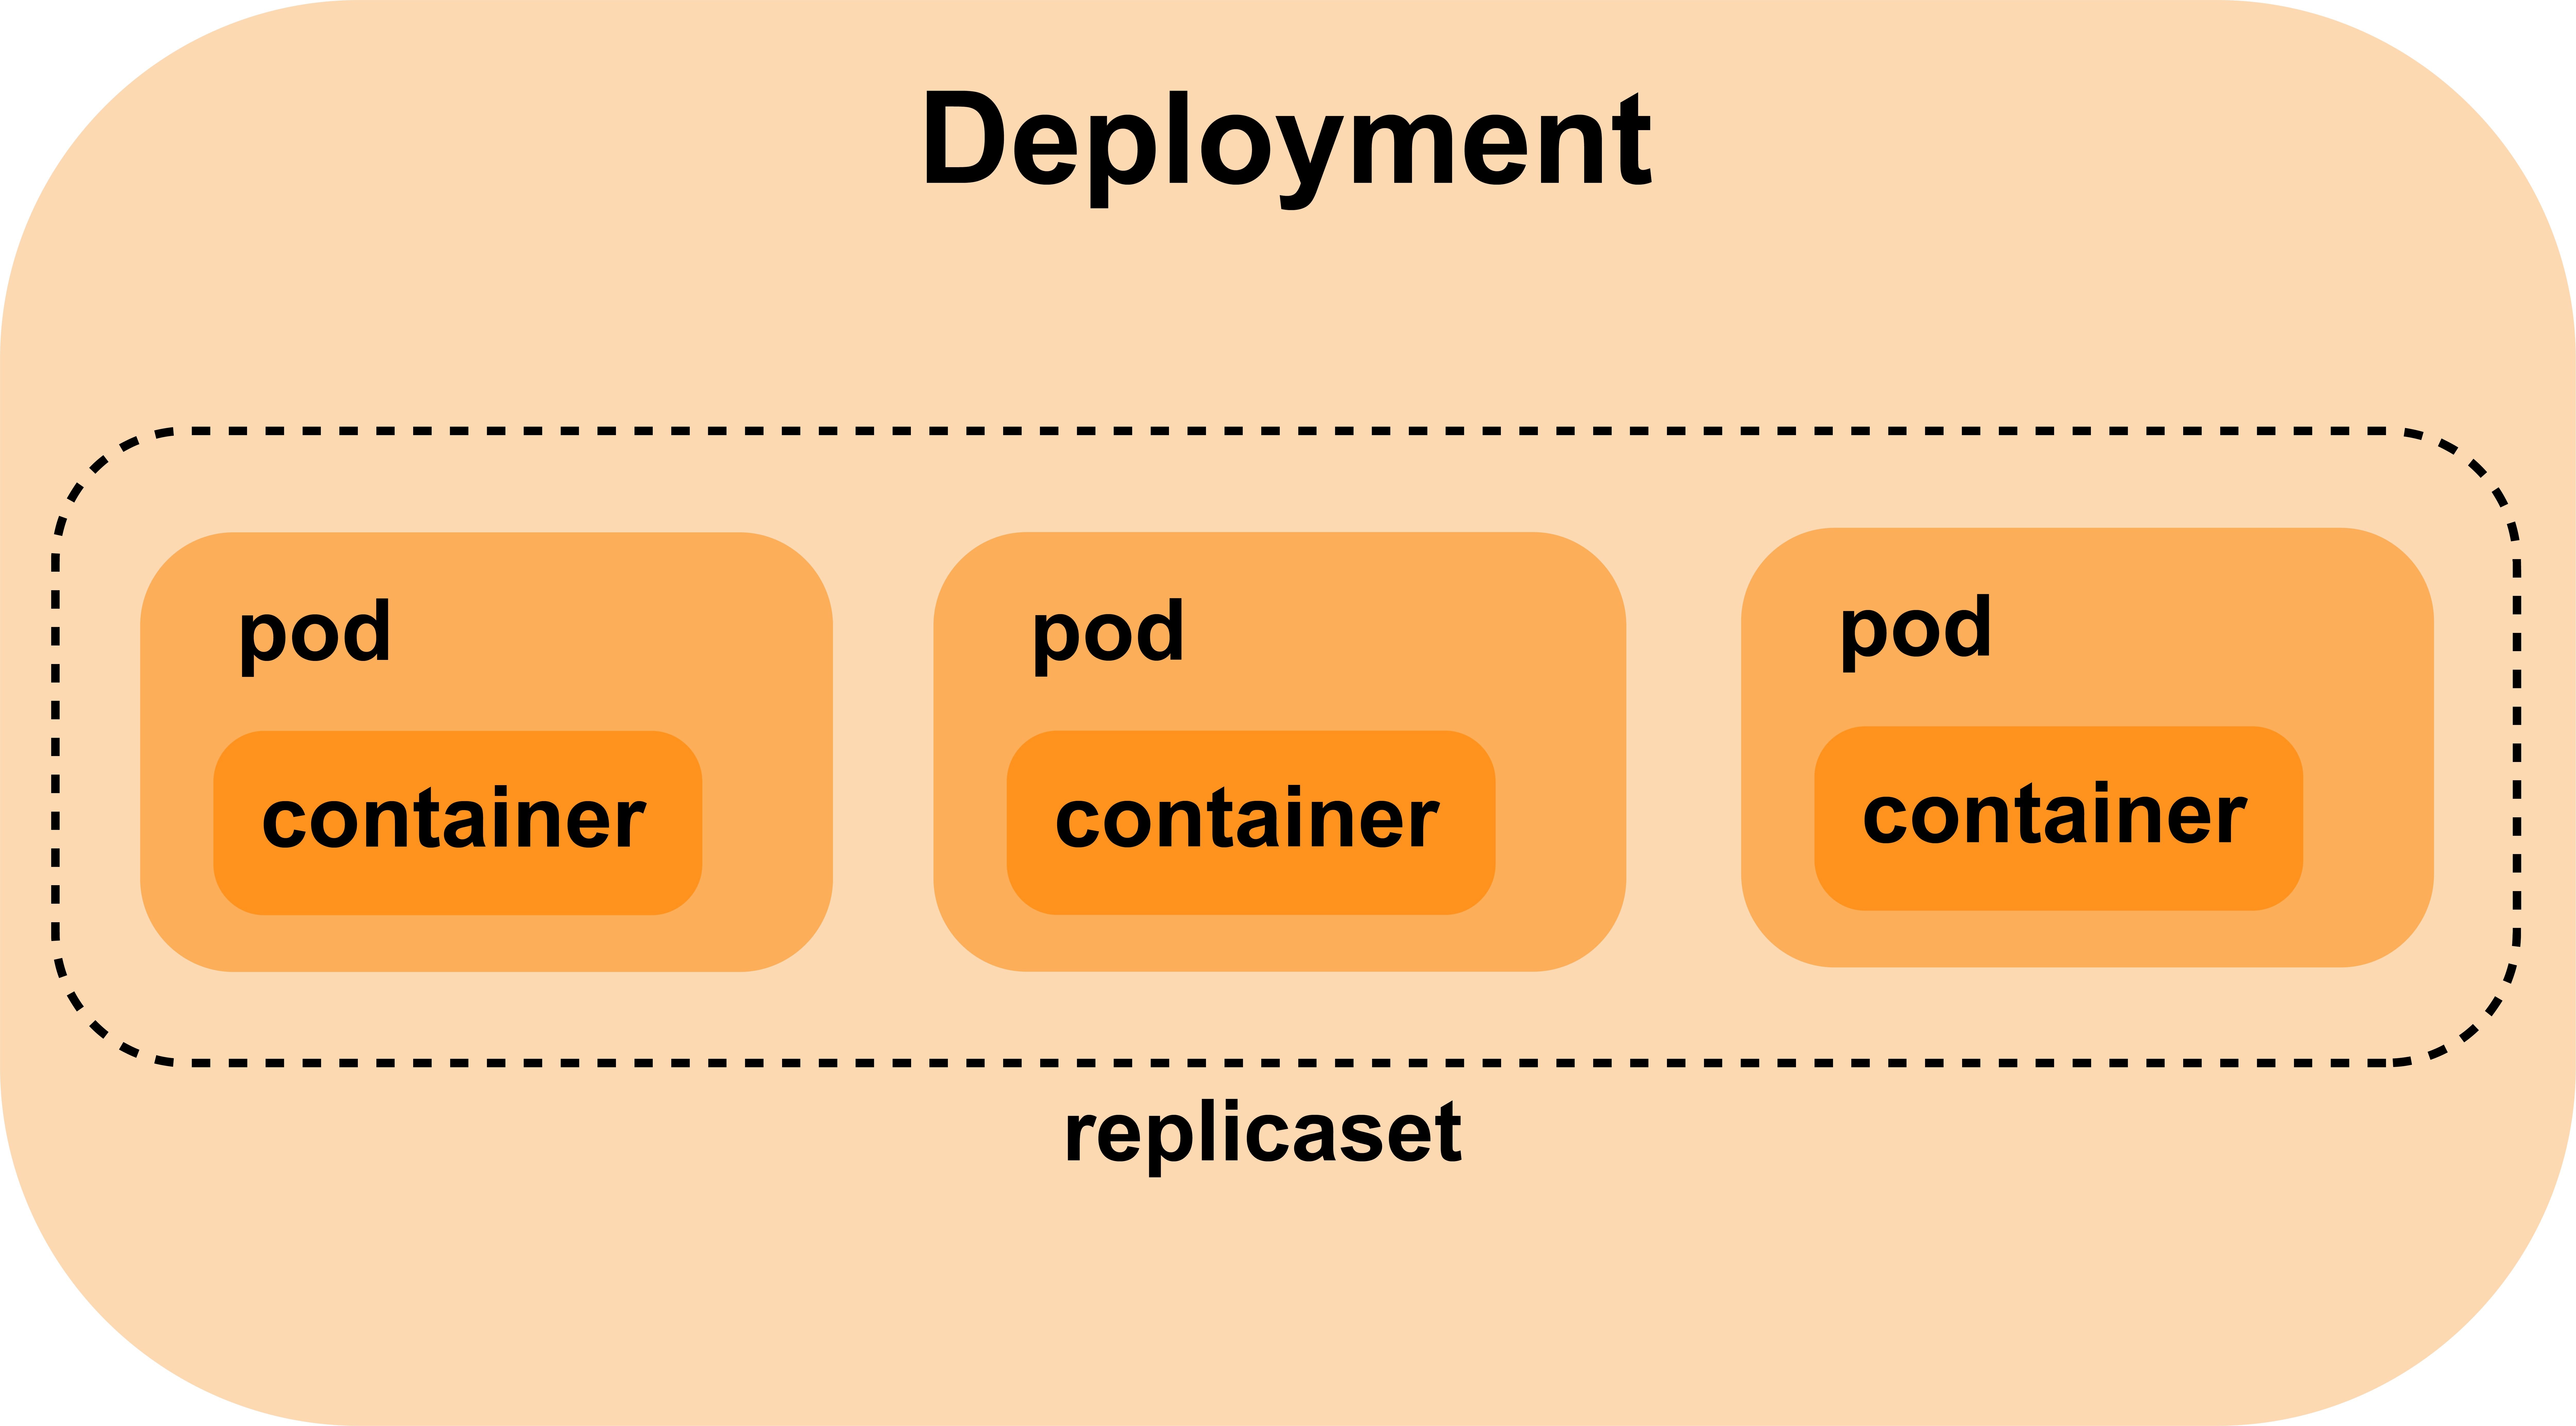 Deployment components